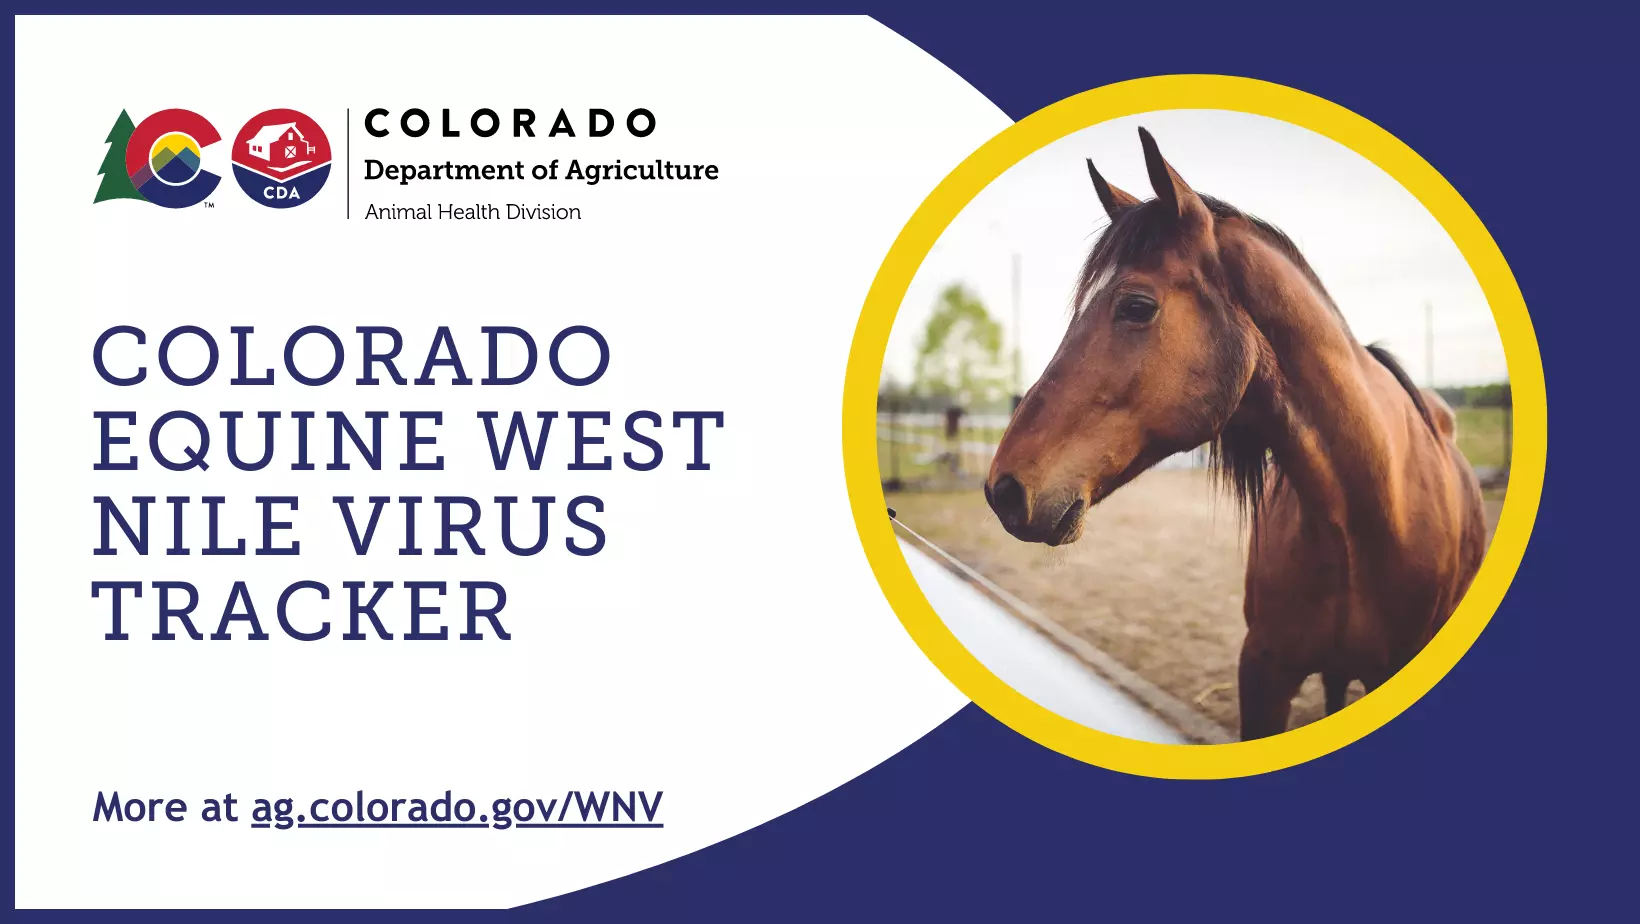 Colorado response to Equine West Nile Virus